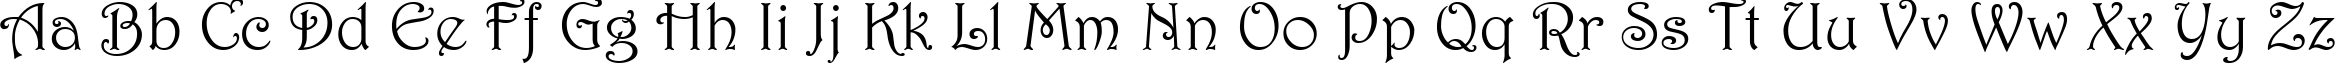 Пример написания английского алфавита шрифтом 1 Harrington M